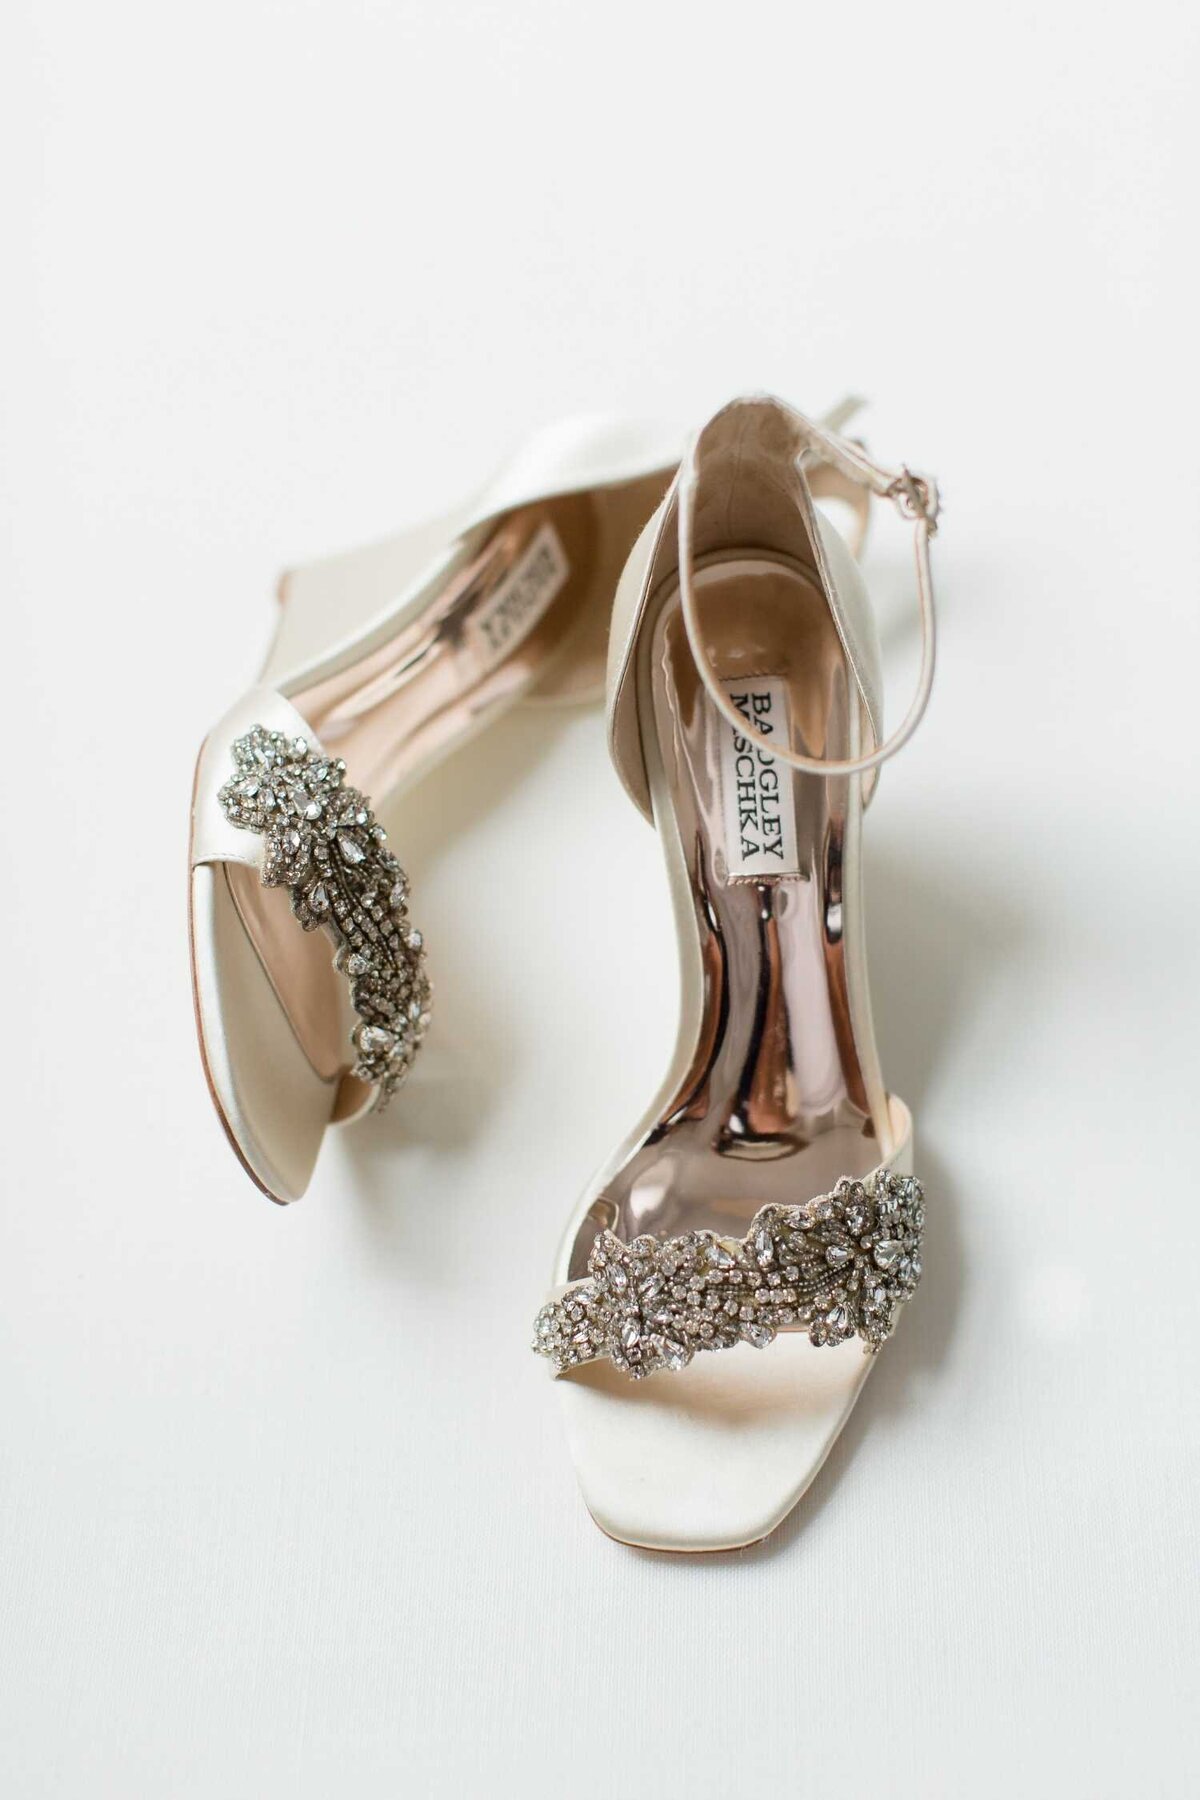 Bagley Mischka Jewel Embellished Wedding Shoes styled for Luxury Chicago Outdoor Historic Wedding Venue.